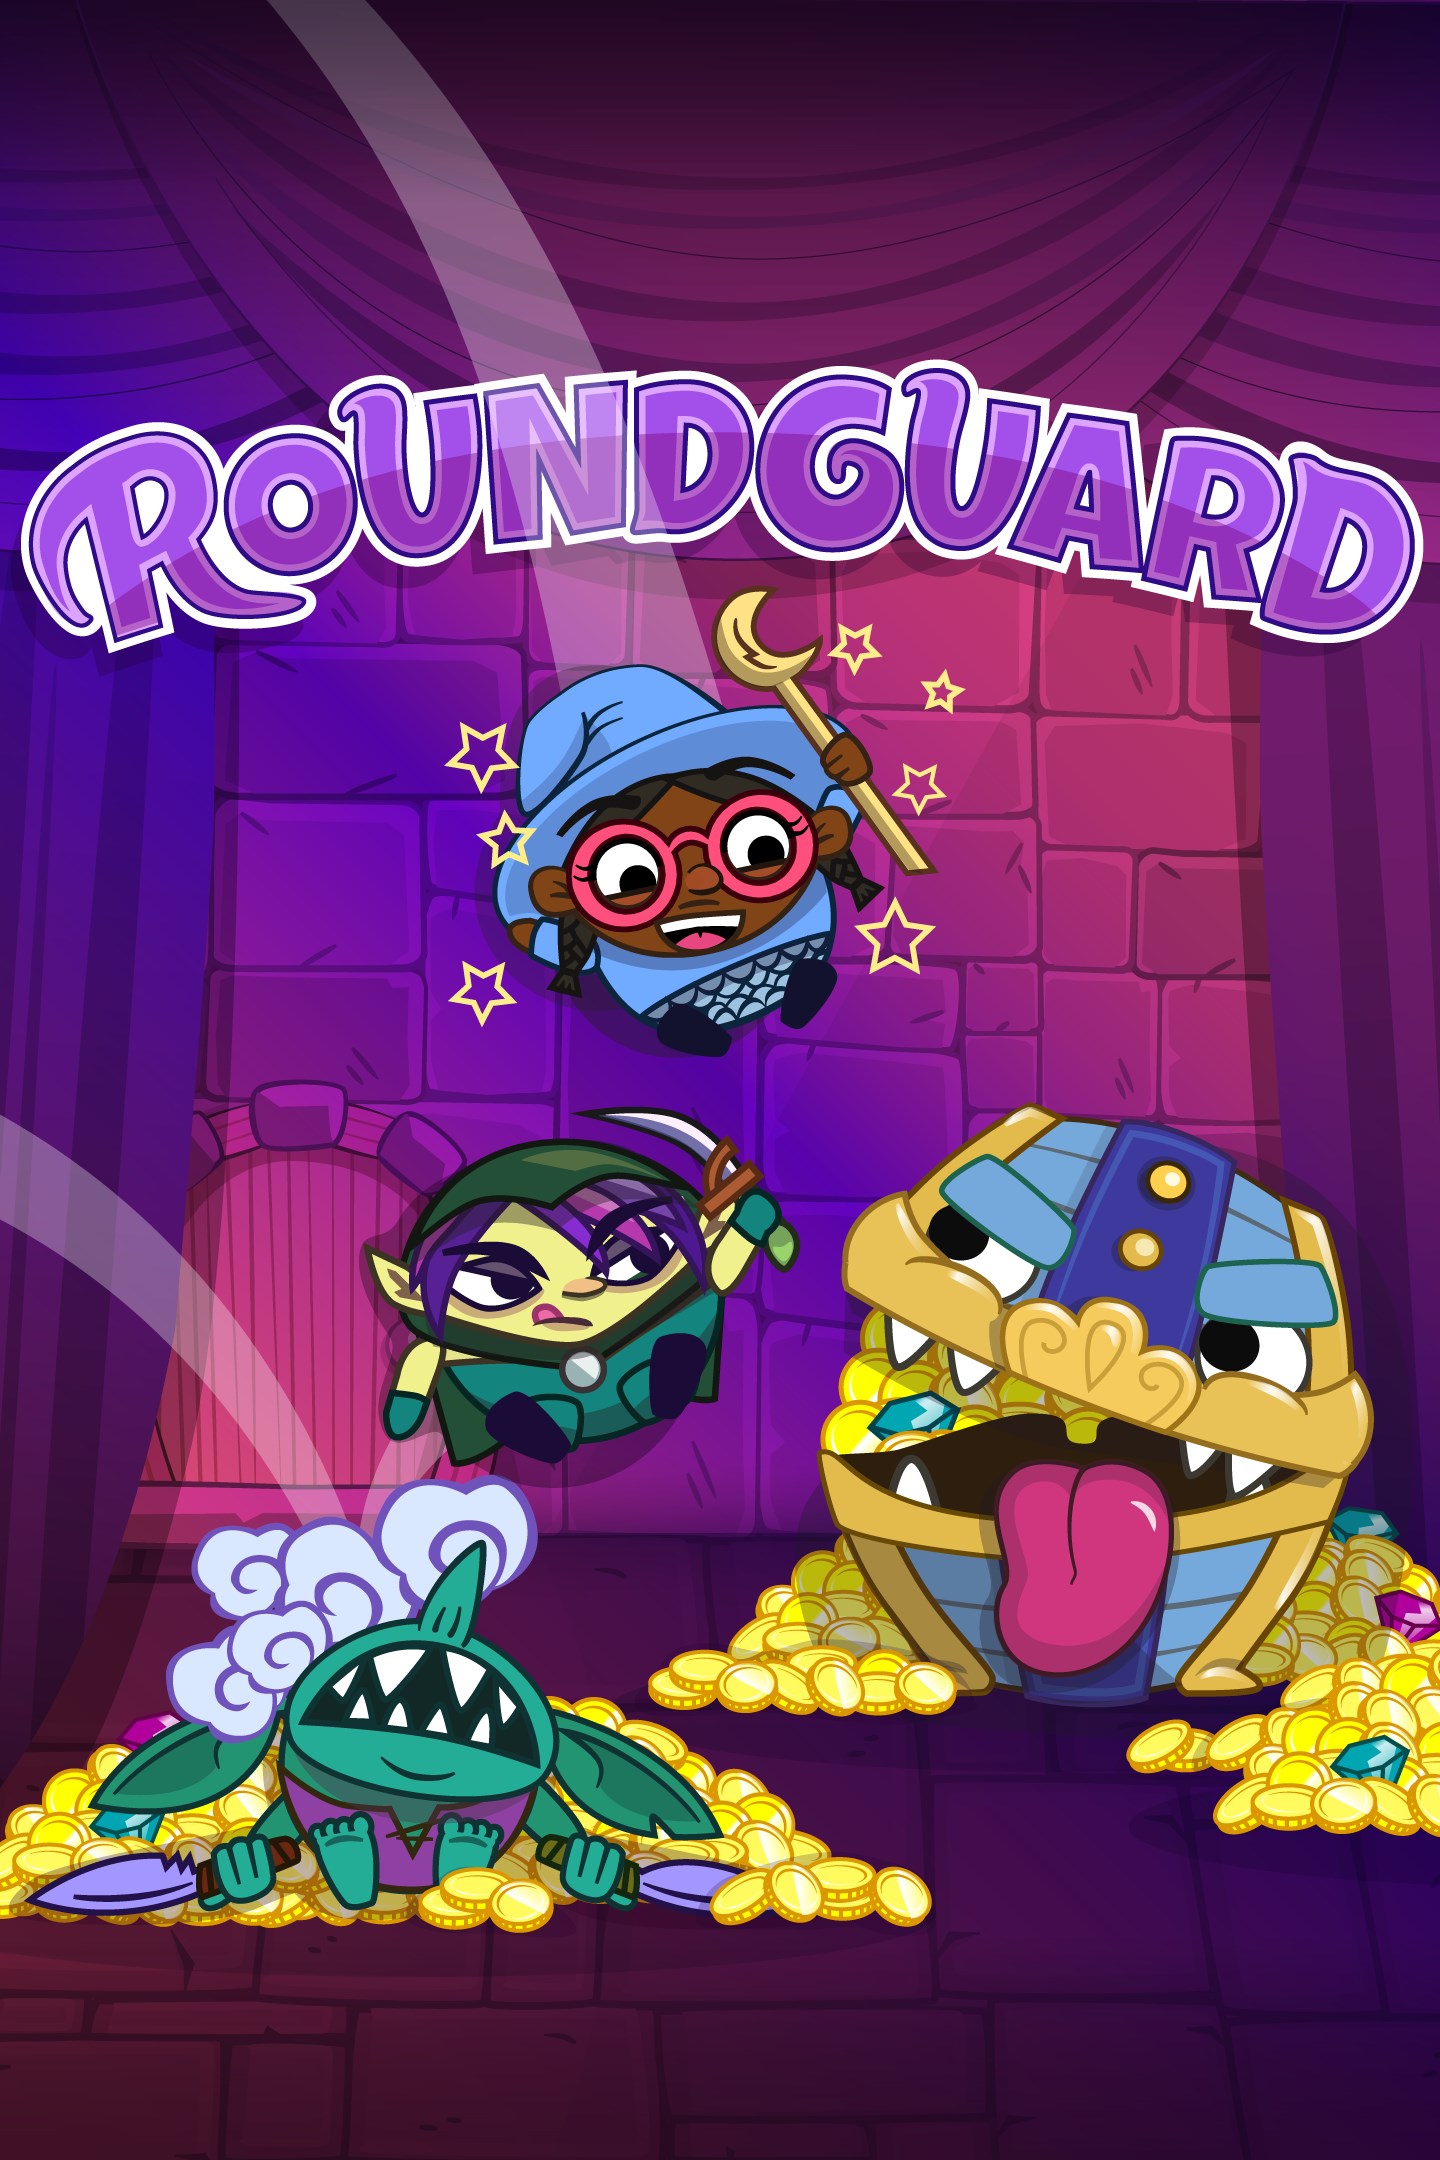 Roundguard представляет уникальную комбинацию Dungeon Crawler и Bouncy Physics для Xbox One